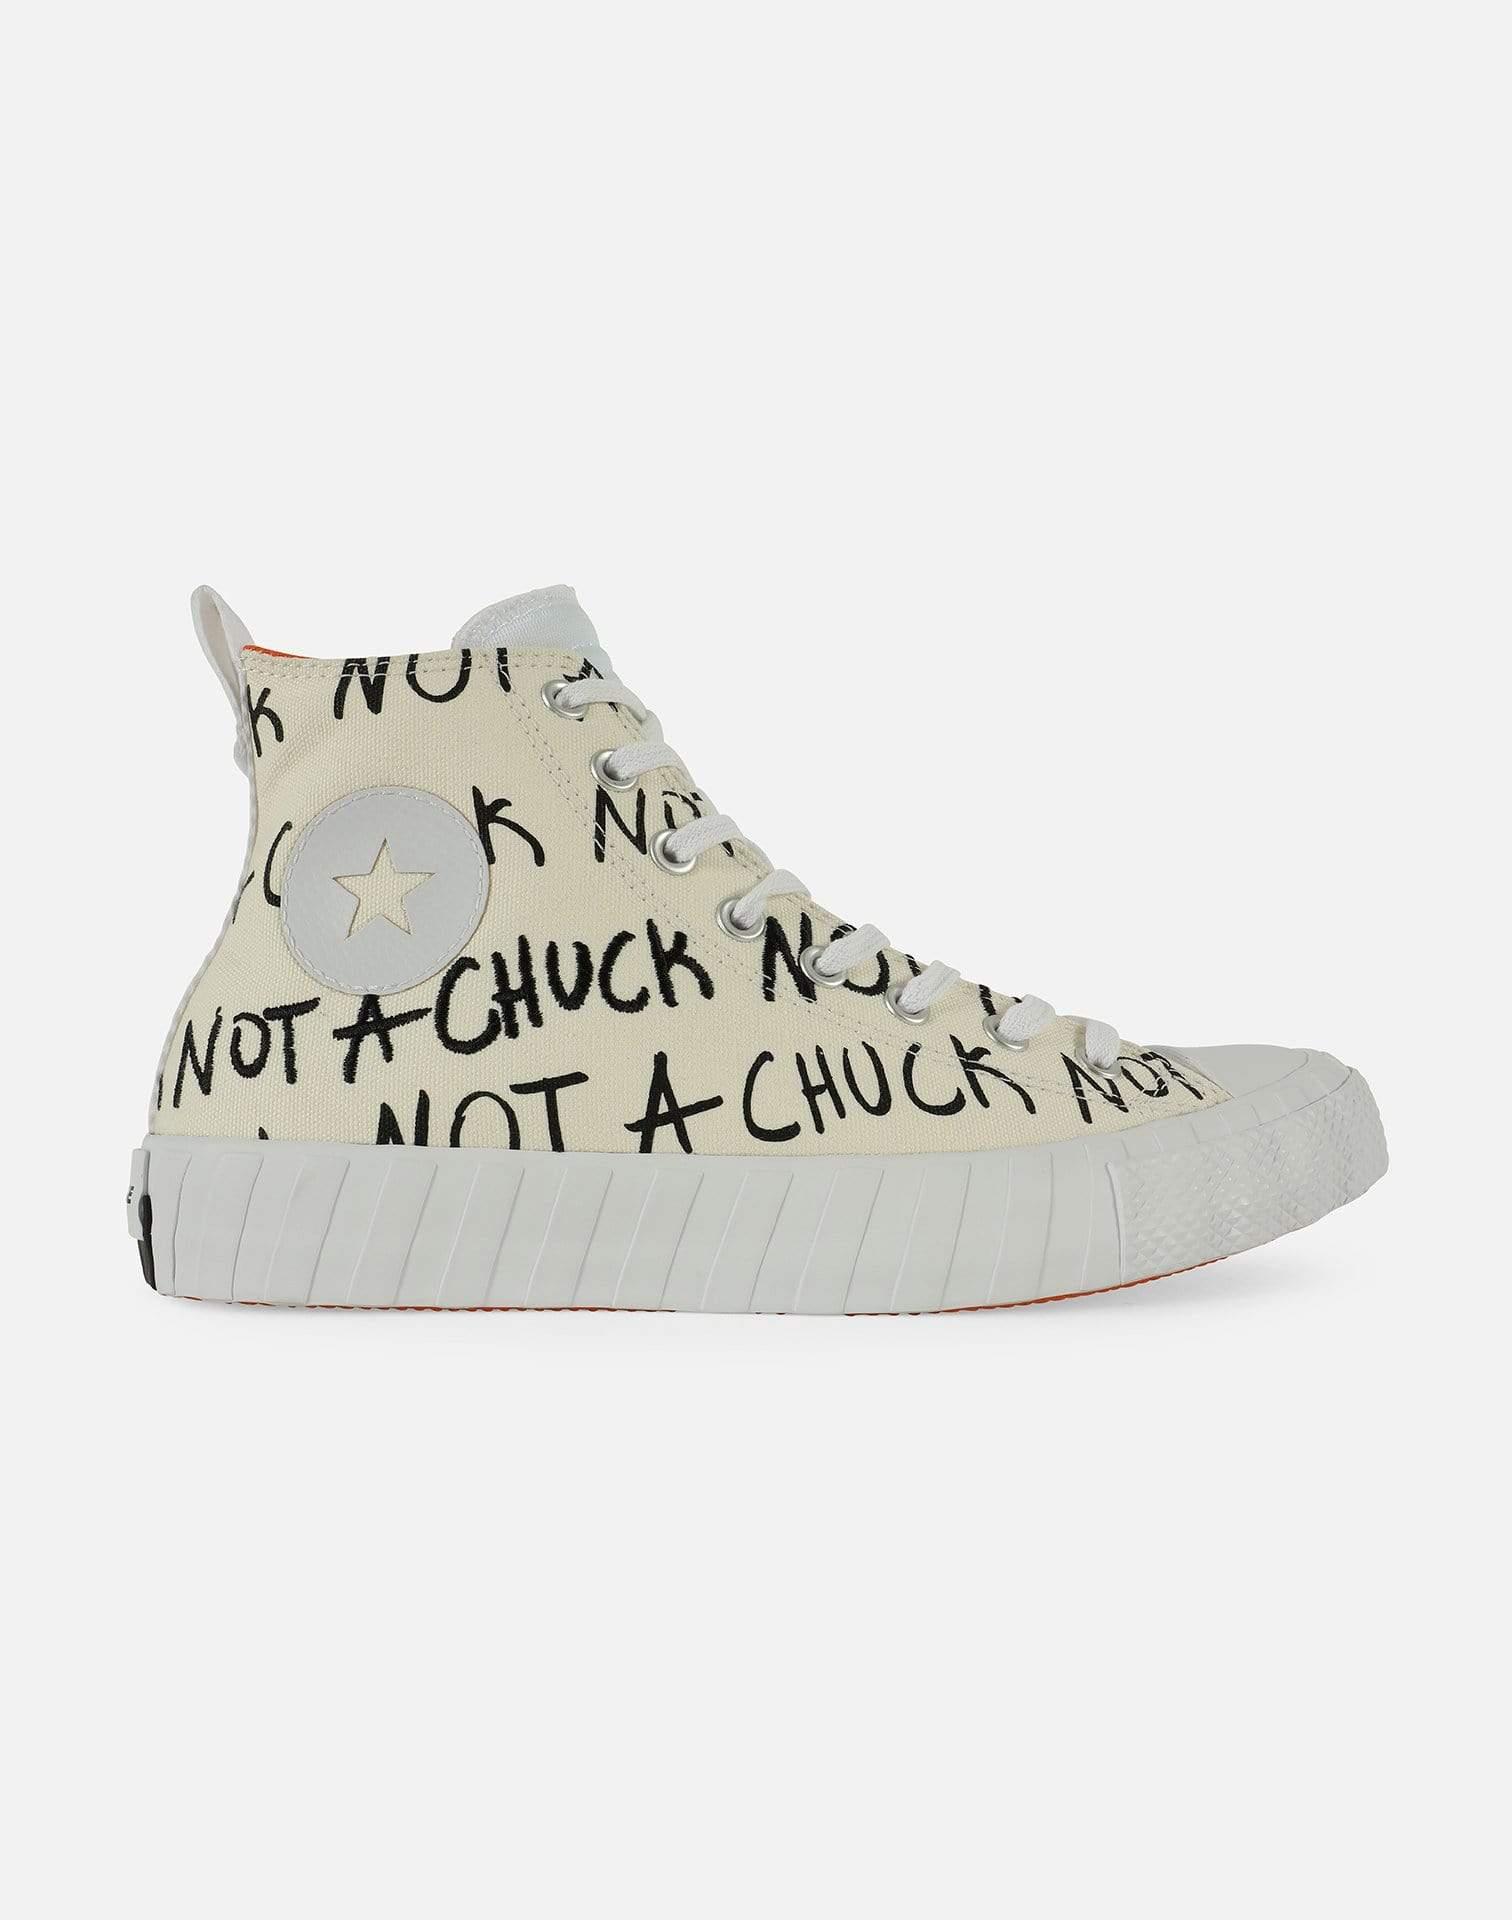 converse shoes not chuck taylors